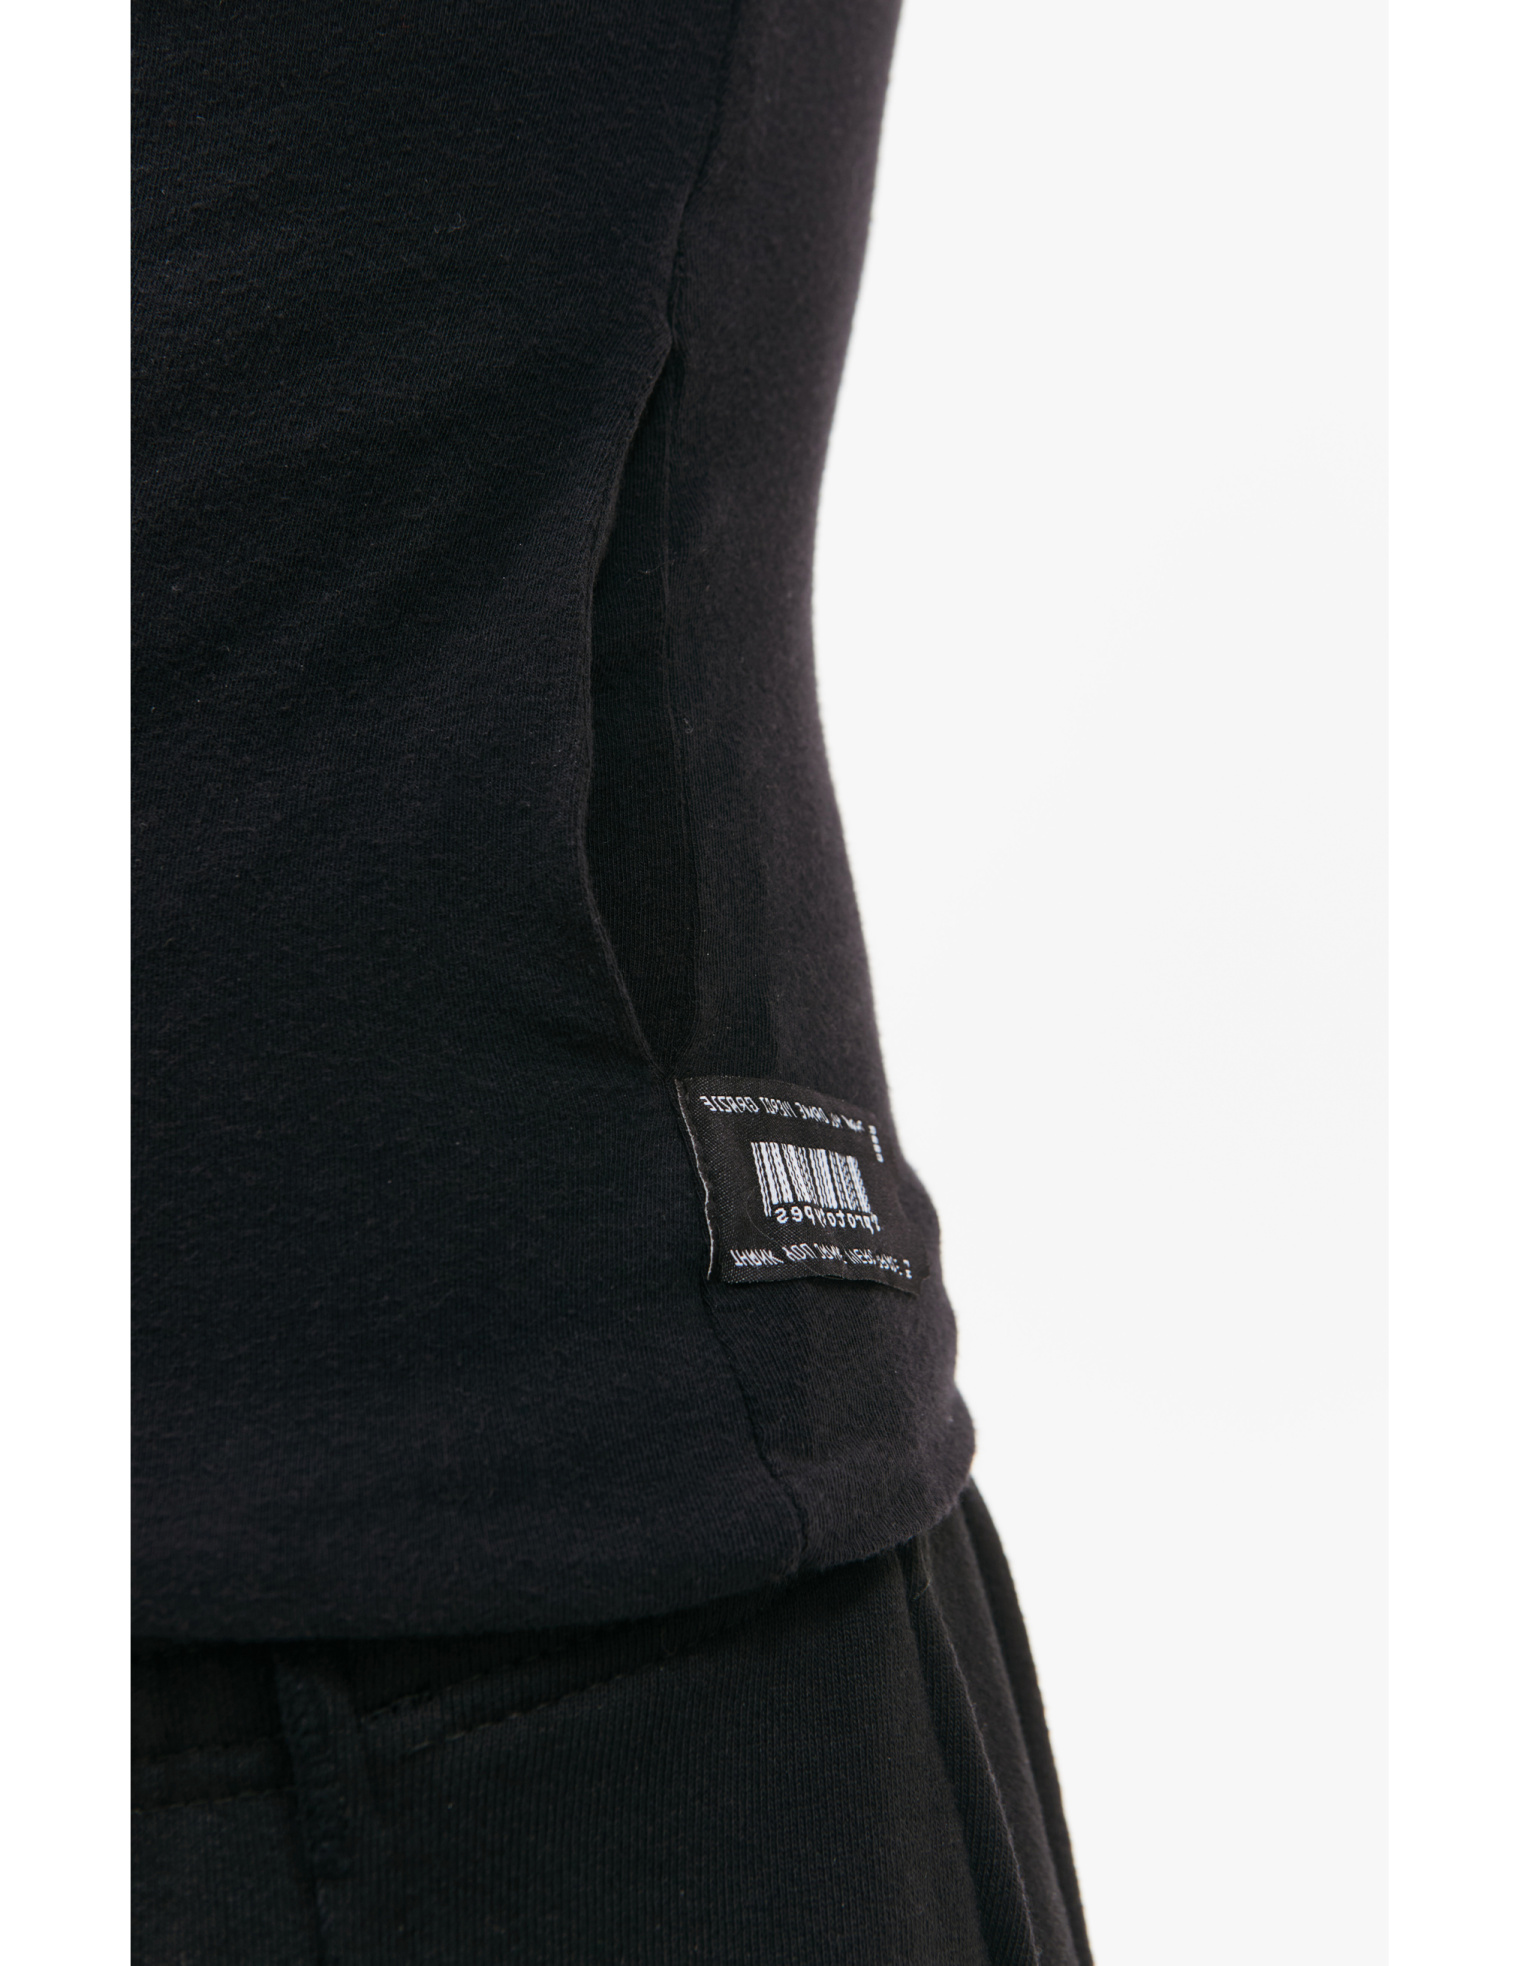 Buy PROTOTYPES men black twisted hoodie for $435 online on SV77 ...